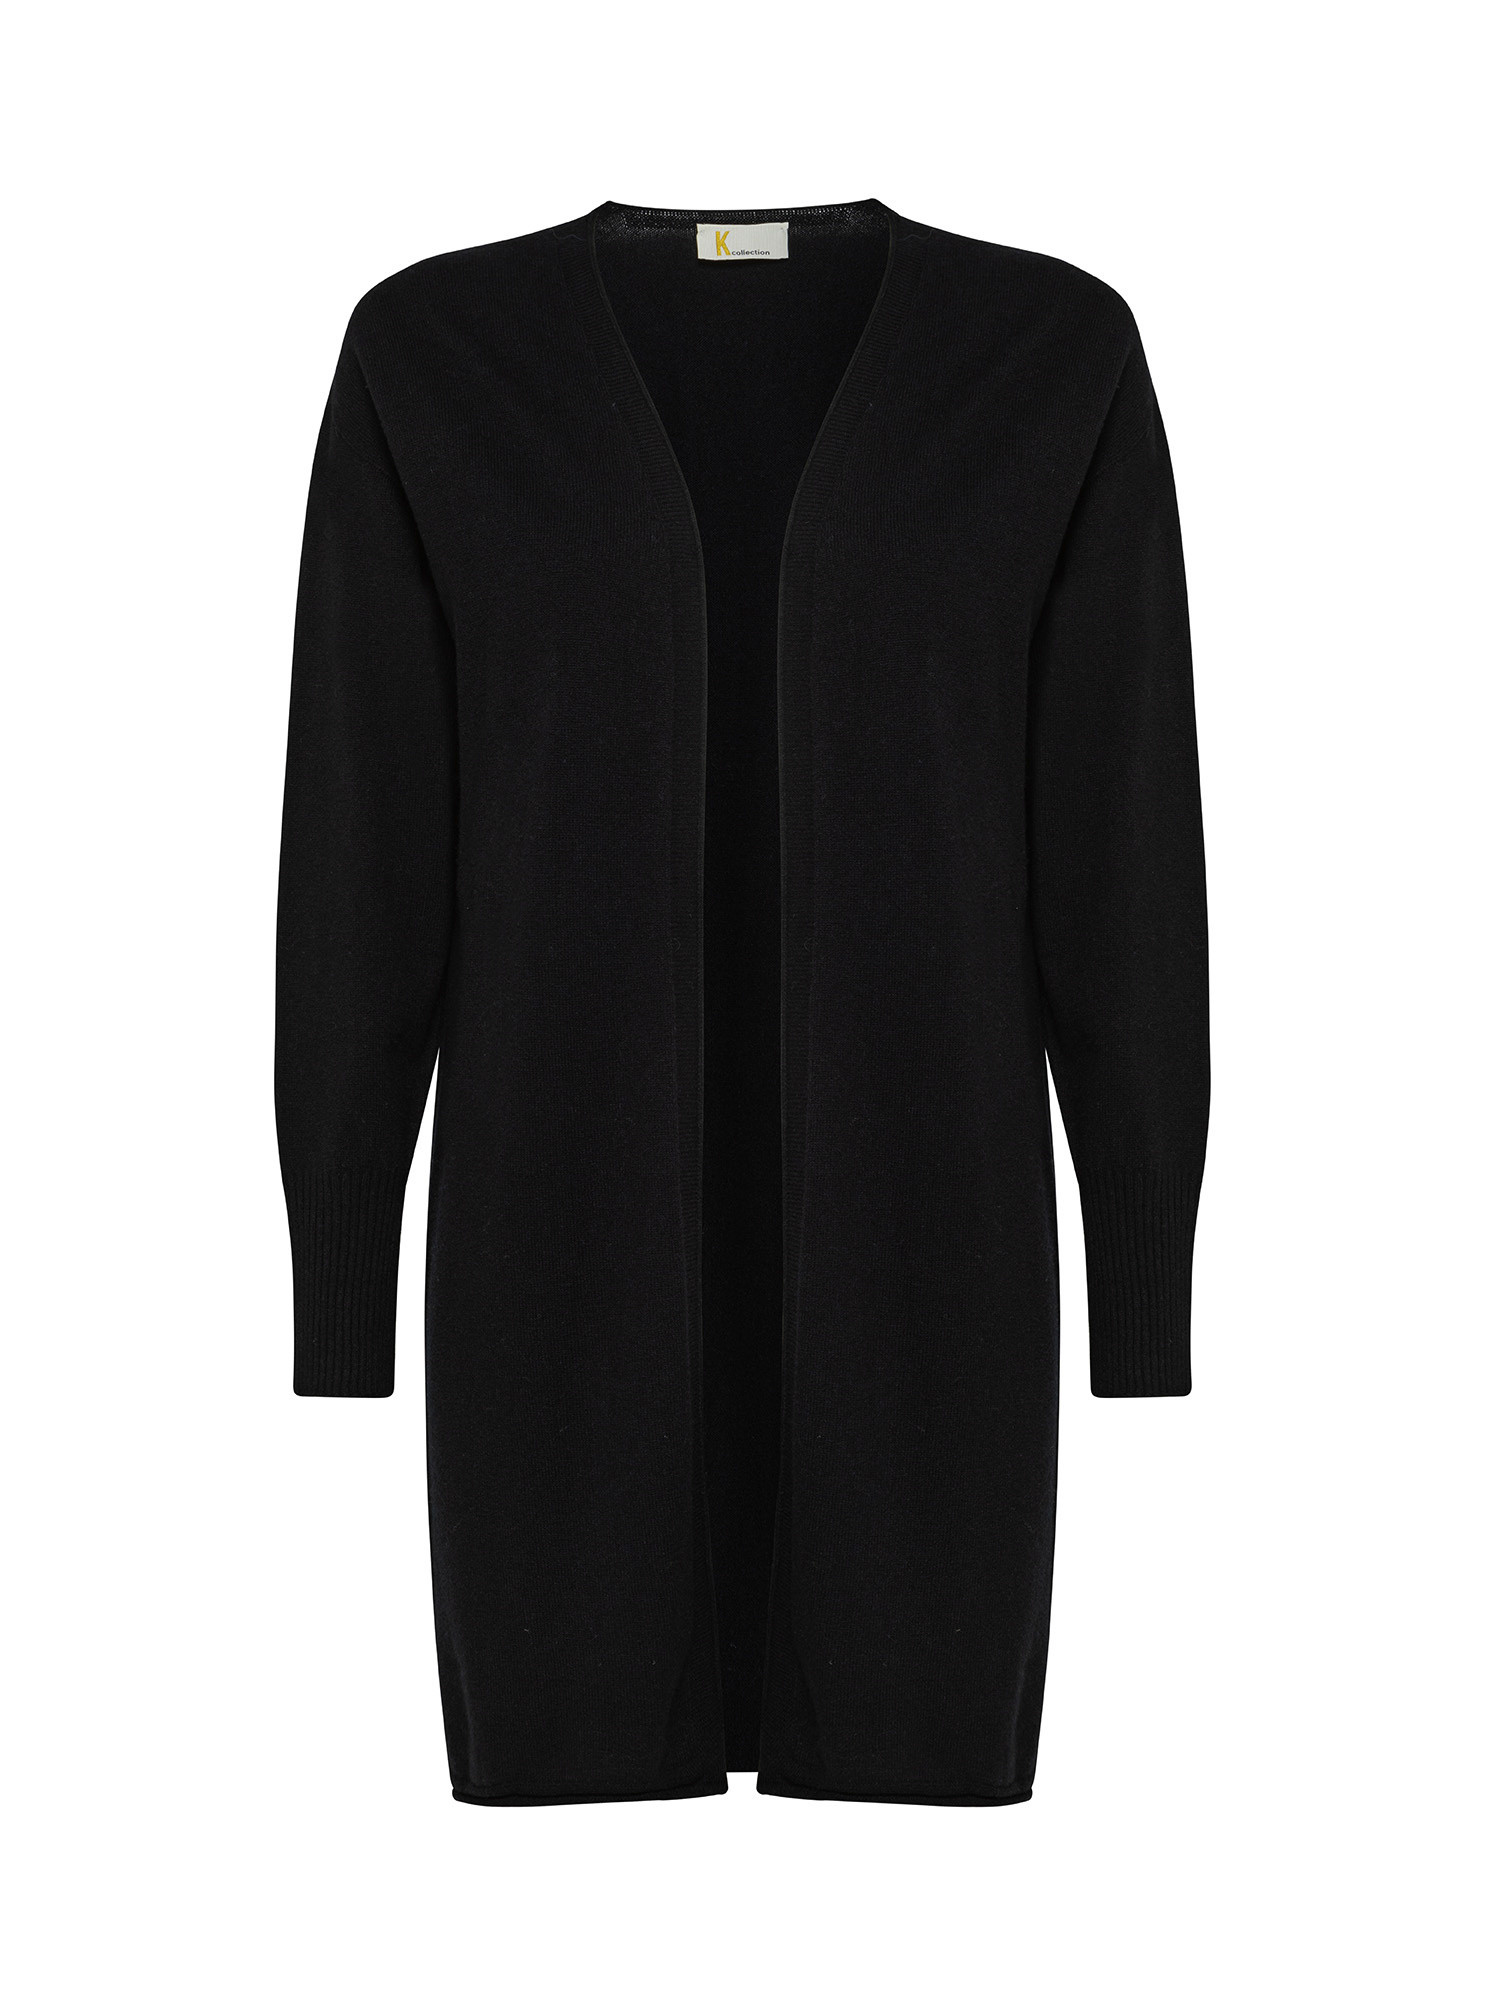 K Collection - Long cardigan, Black, large image number 0